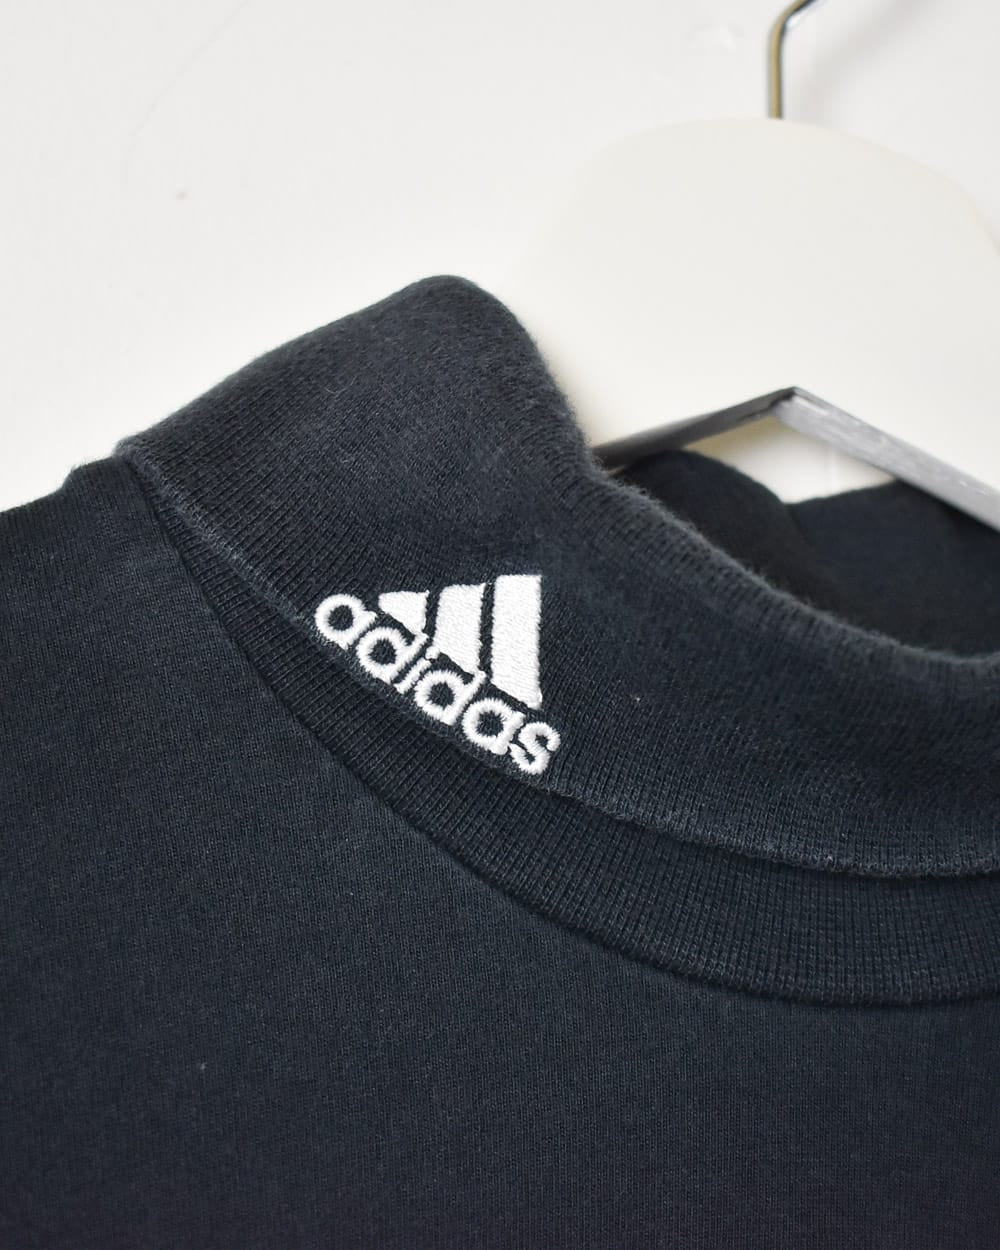 Black Adidas Turtle Neck Long Sleeved T-Shirt - Medium